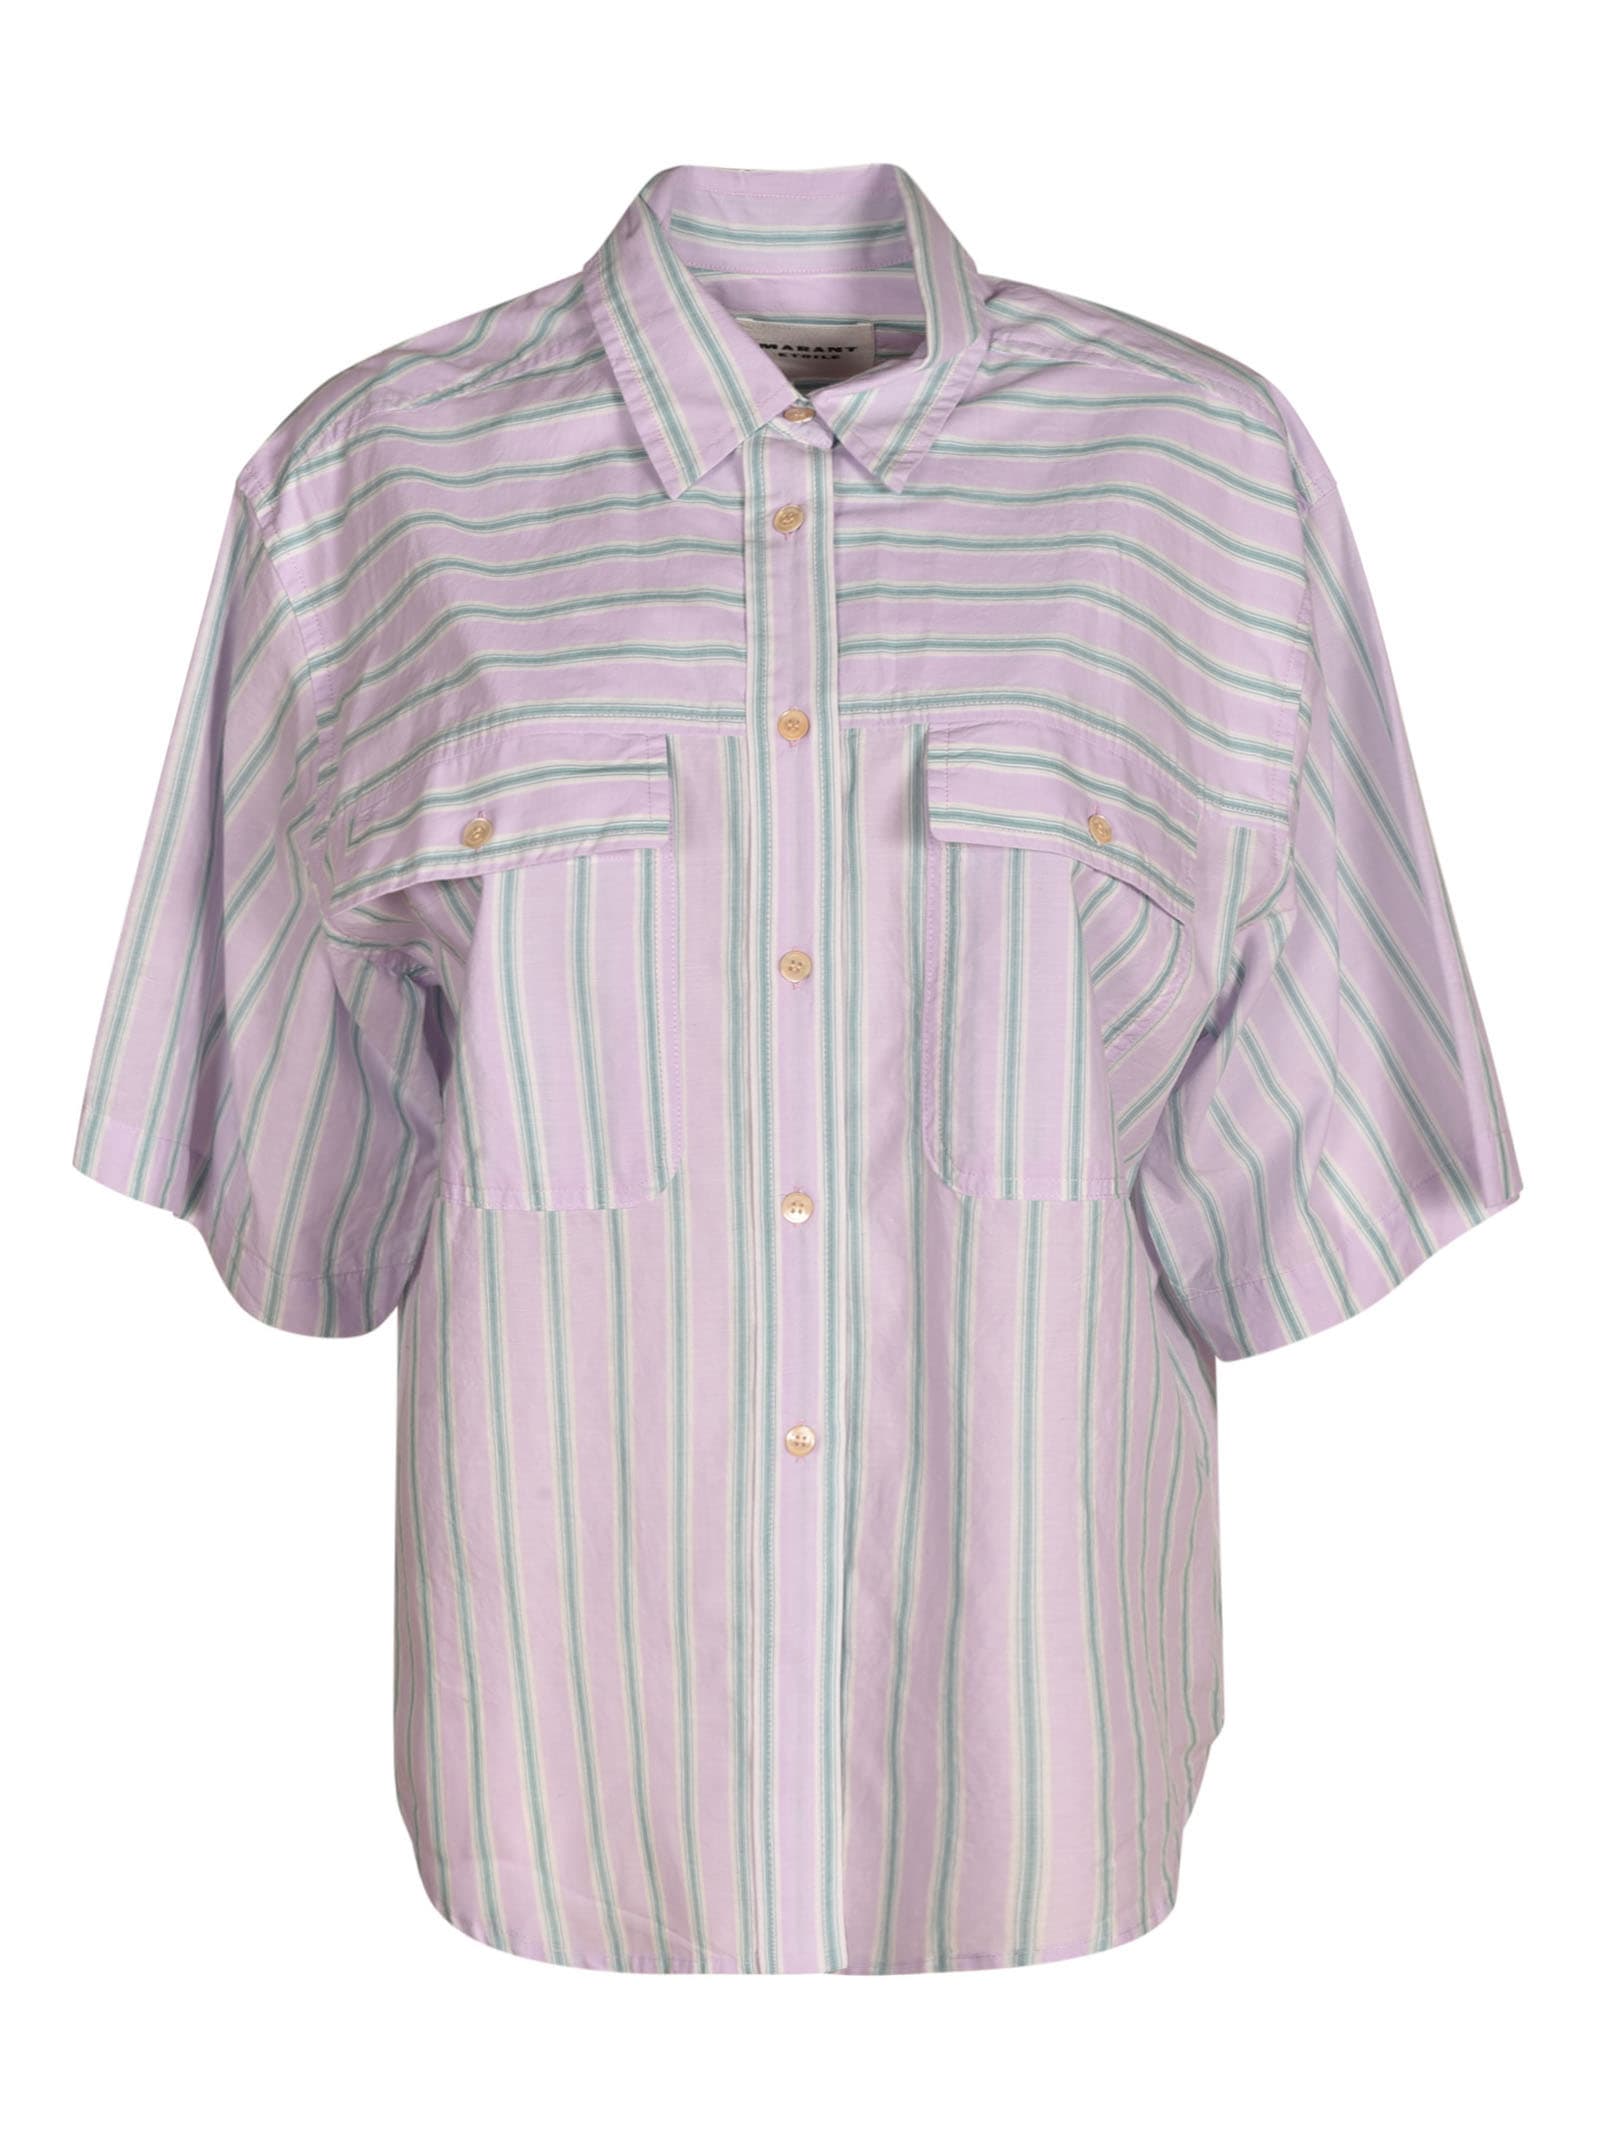 Nulenci striped cotton shirt